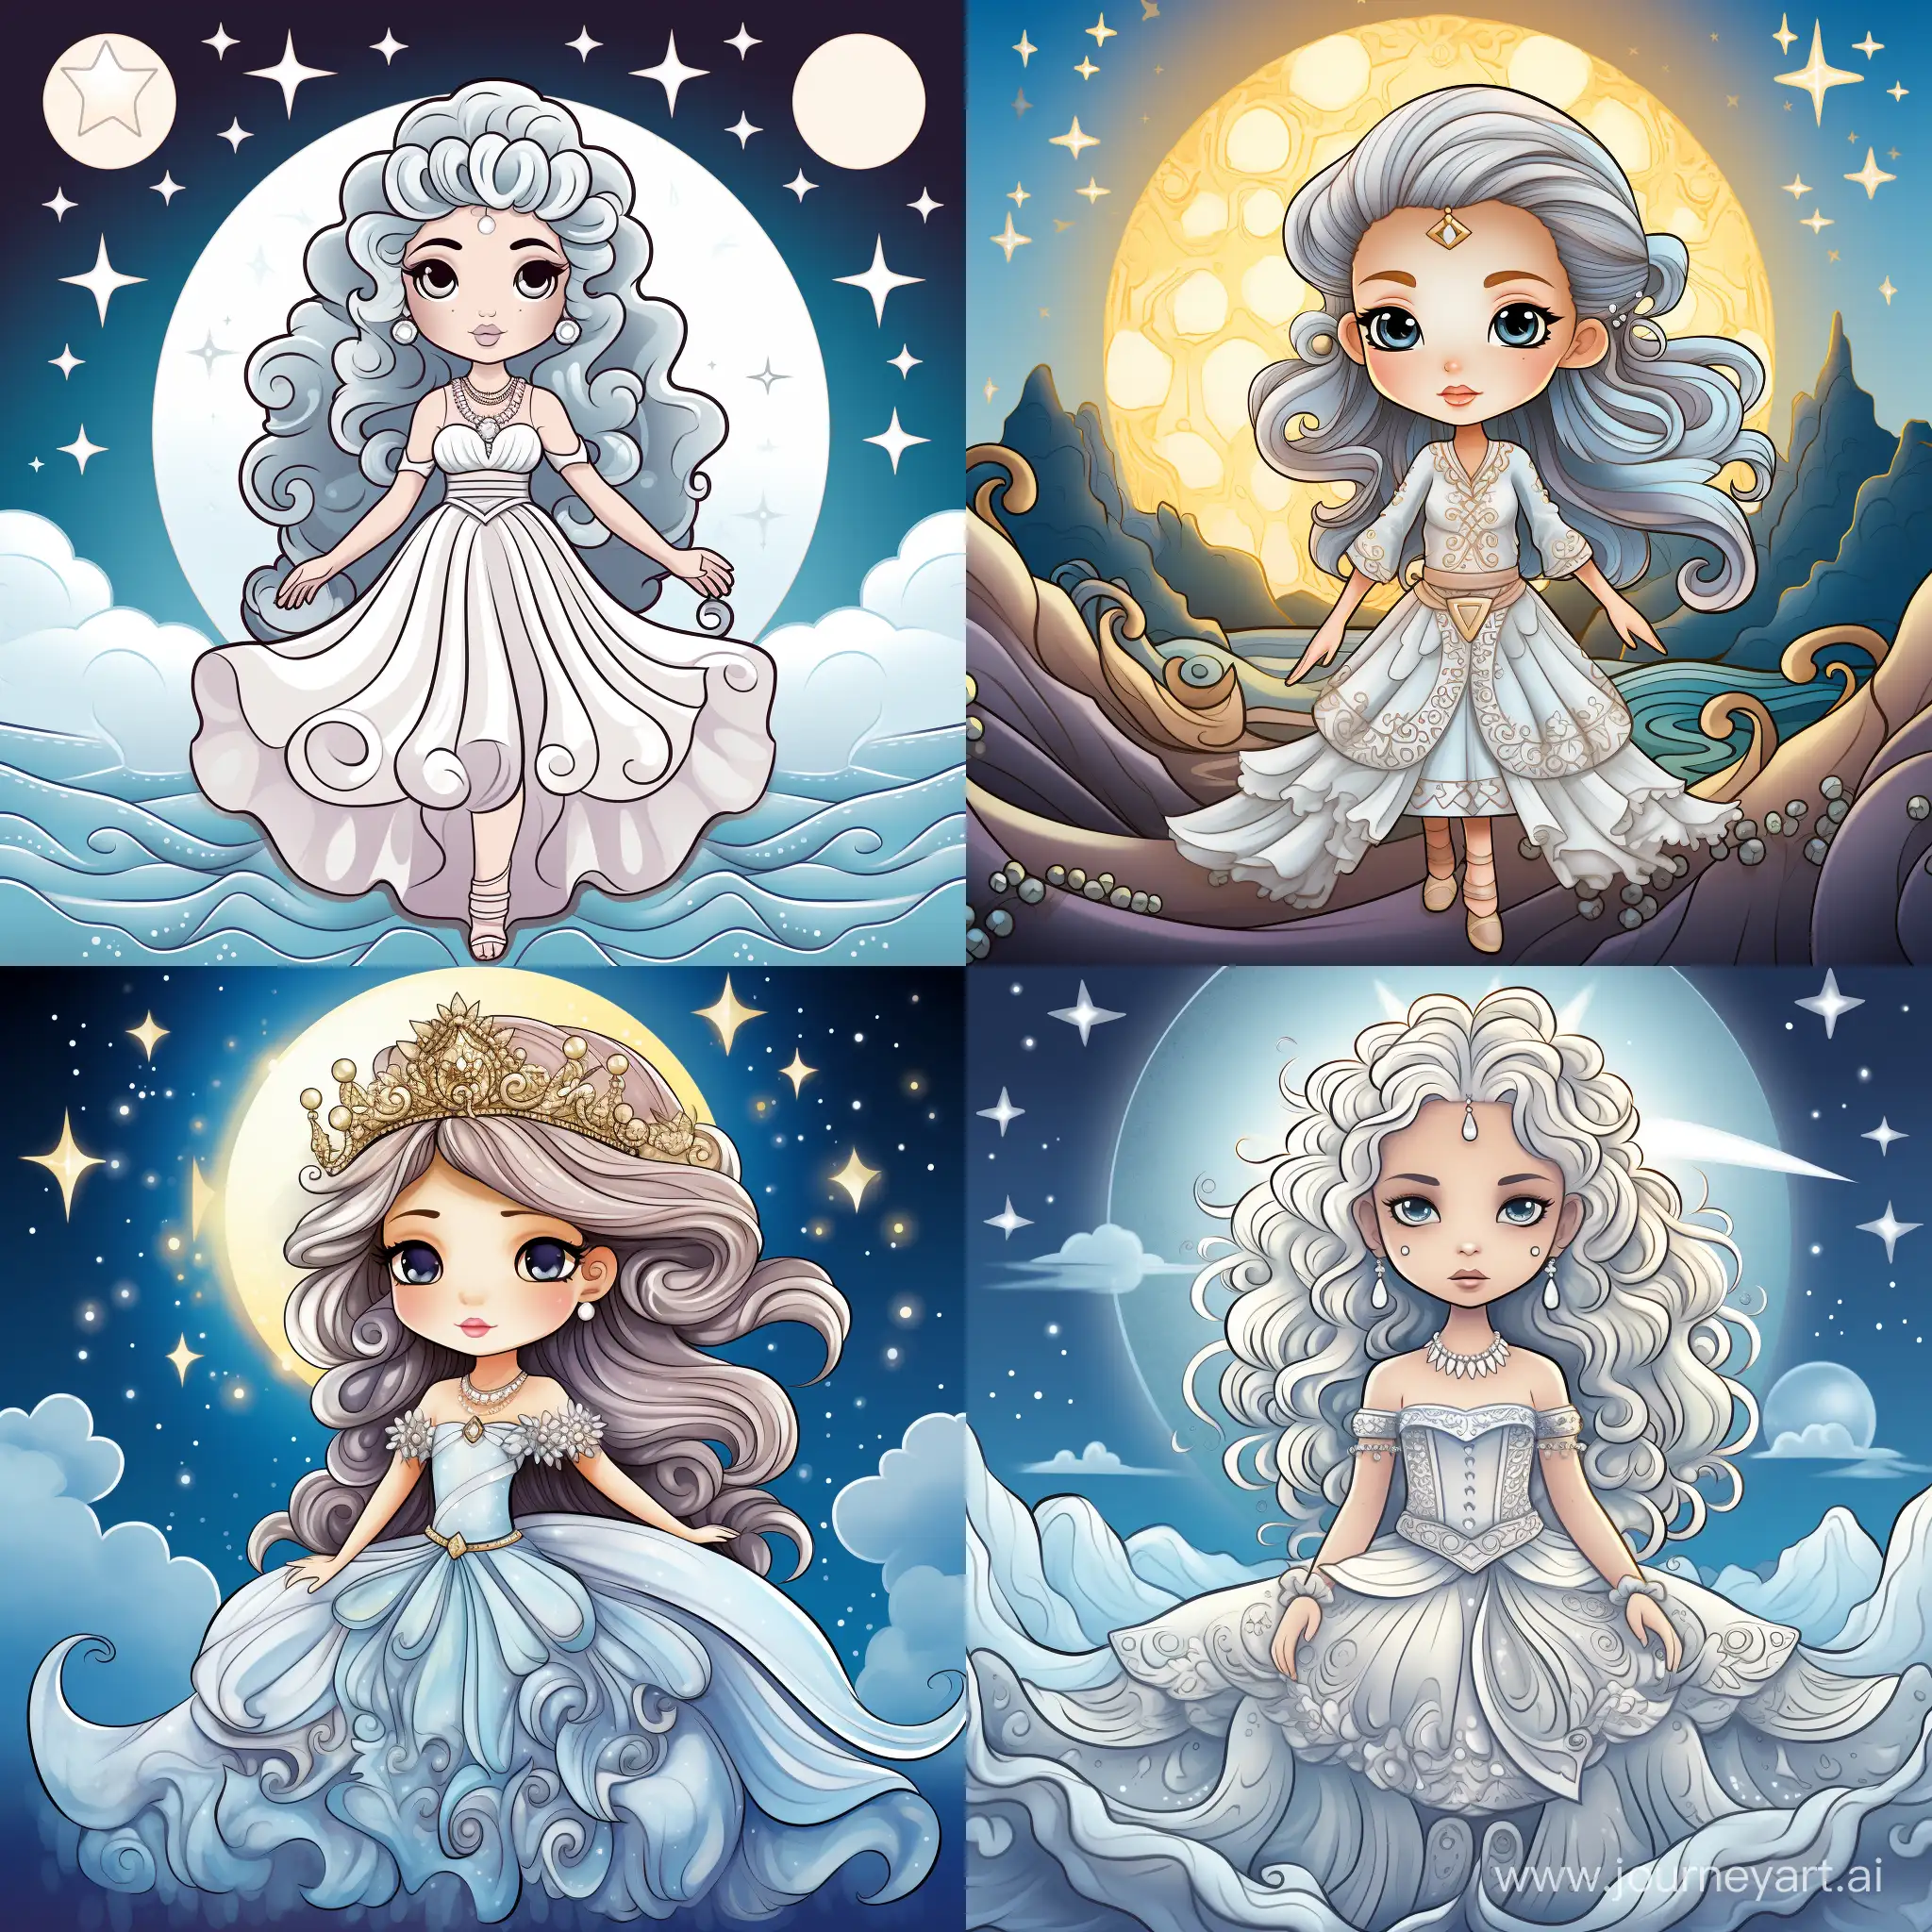 Enchanting-Moonlight-Princess-Coloring-Page-for-Kids